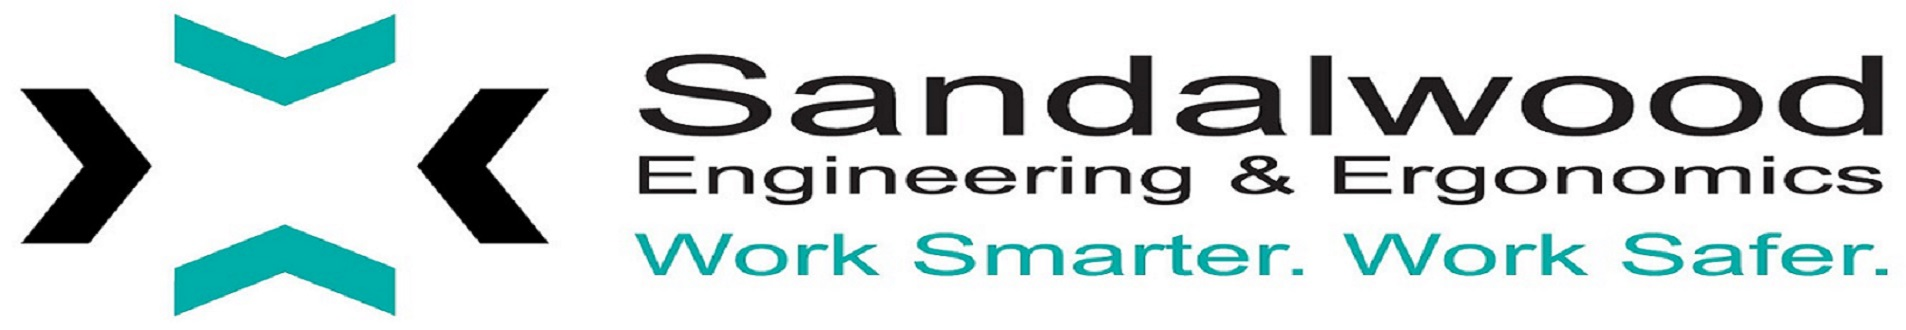 Sandalwood Engineering & Ergonomics Company Logo